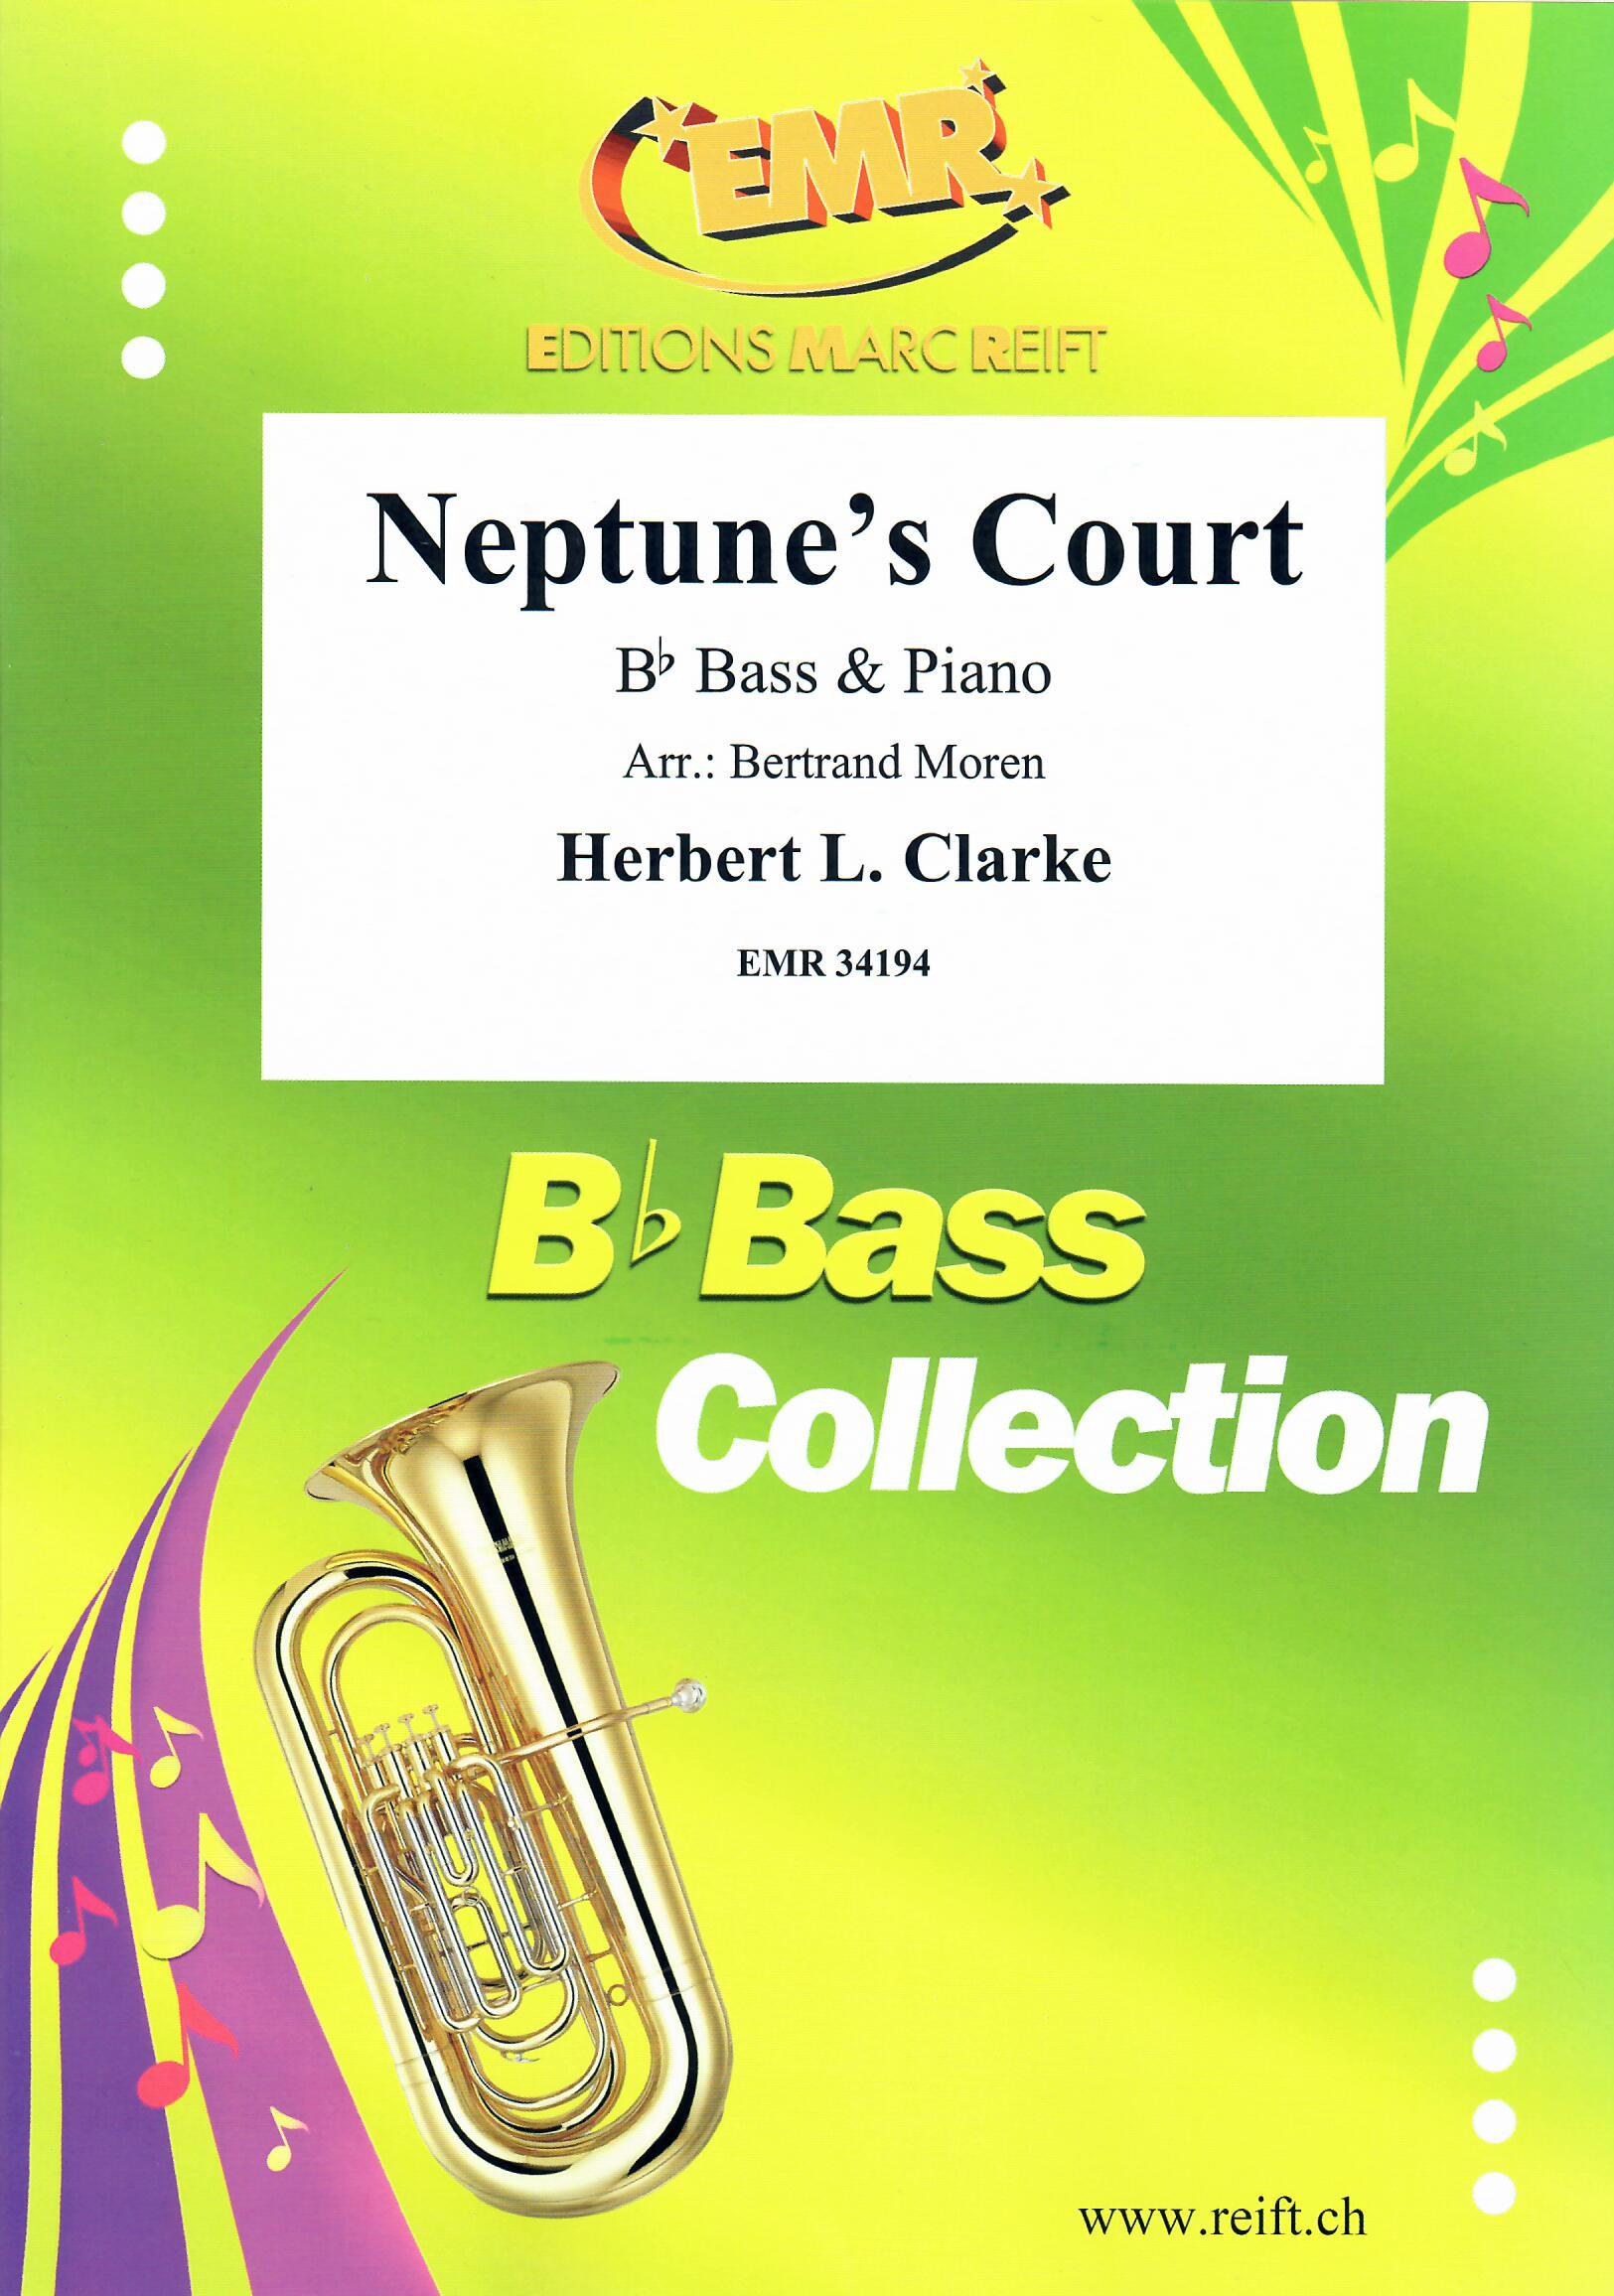 NEPTUNE'S COURT, SOLOS - E♭. Bass